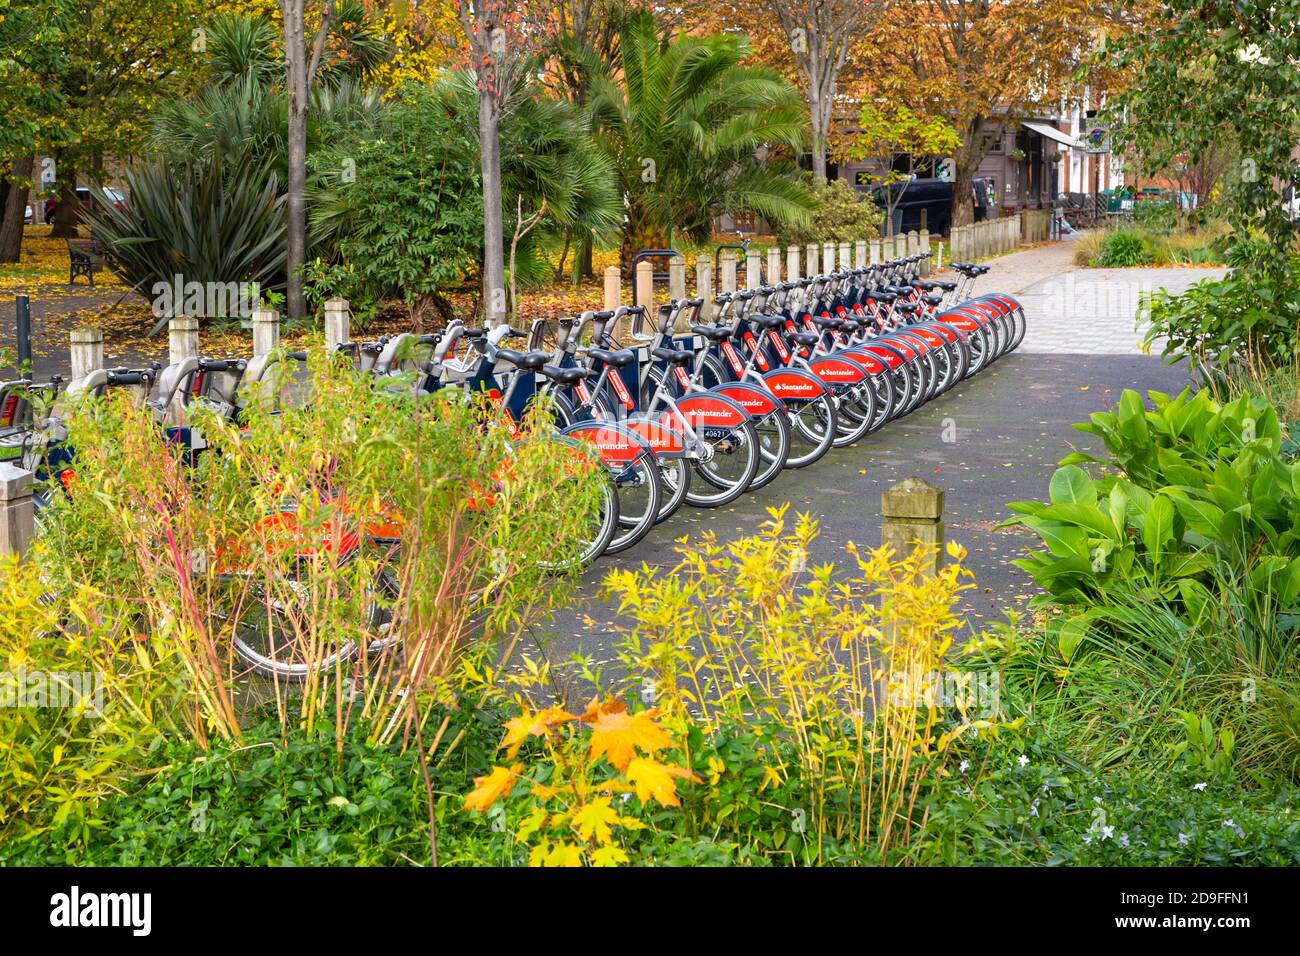 Noleggio biciclette Santander boris, vauxhall Pleasure Gardens, londra, regno unito Foto Stock